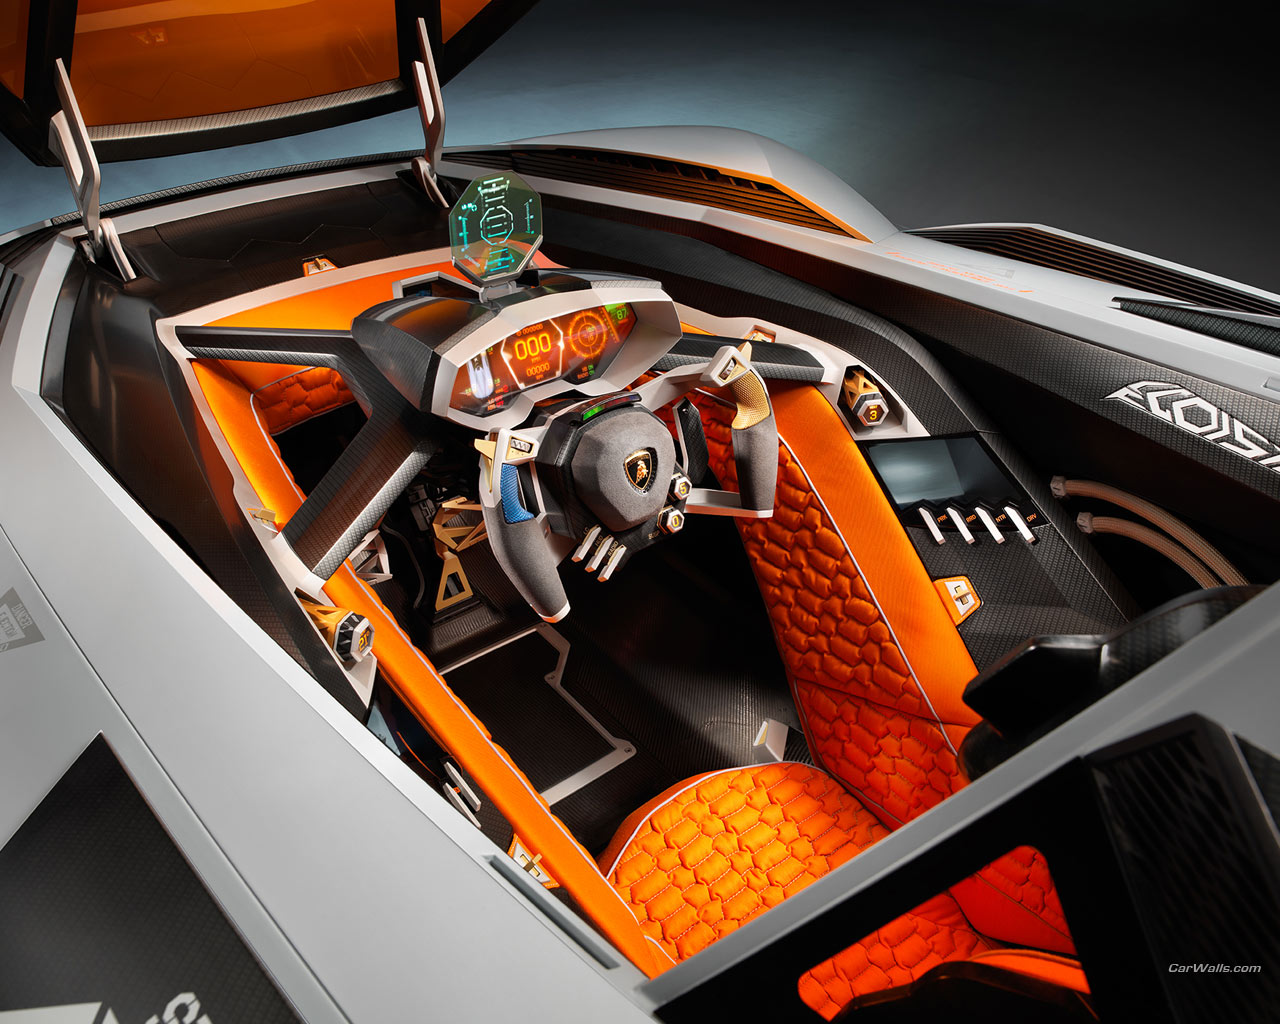 Lamborghini Image Egoista HD Wallpaper And Background